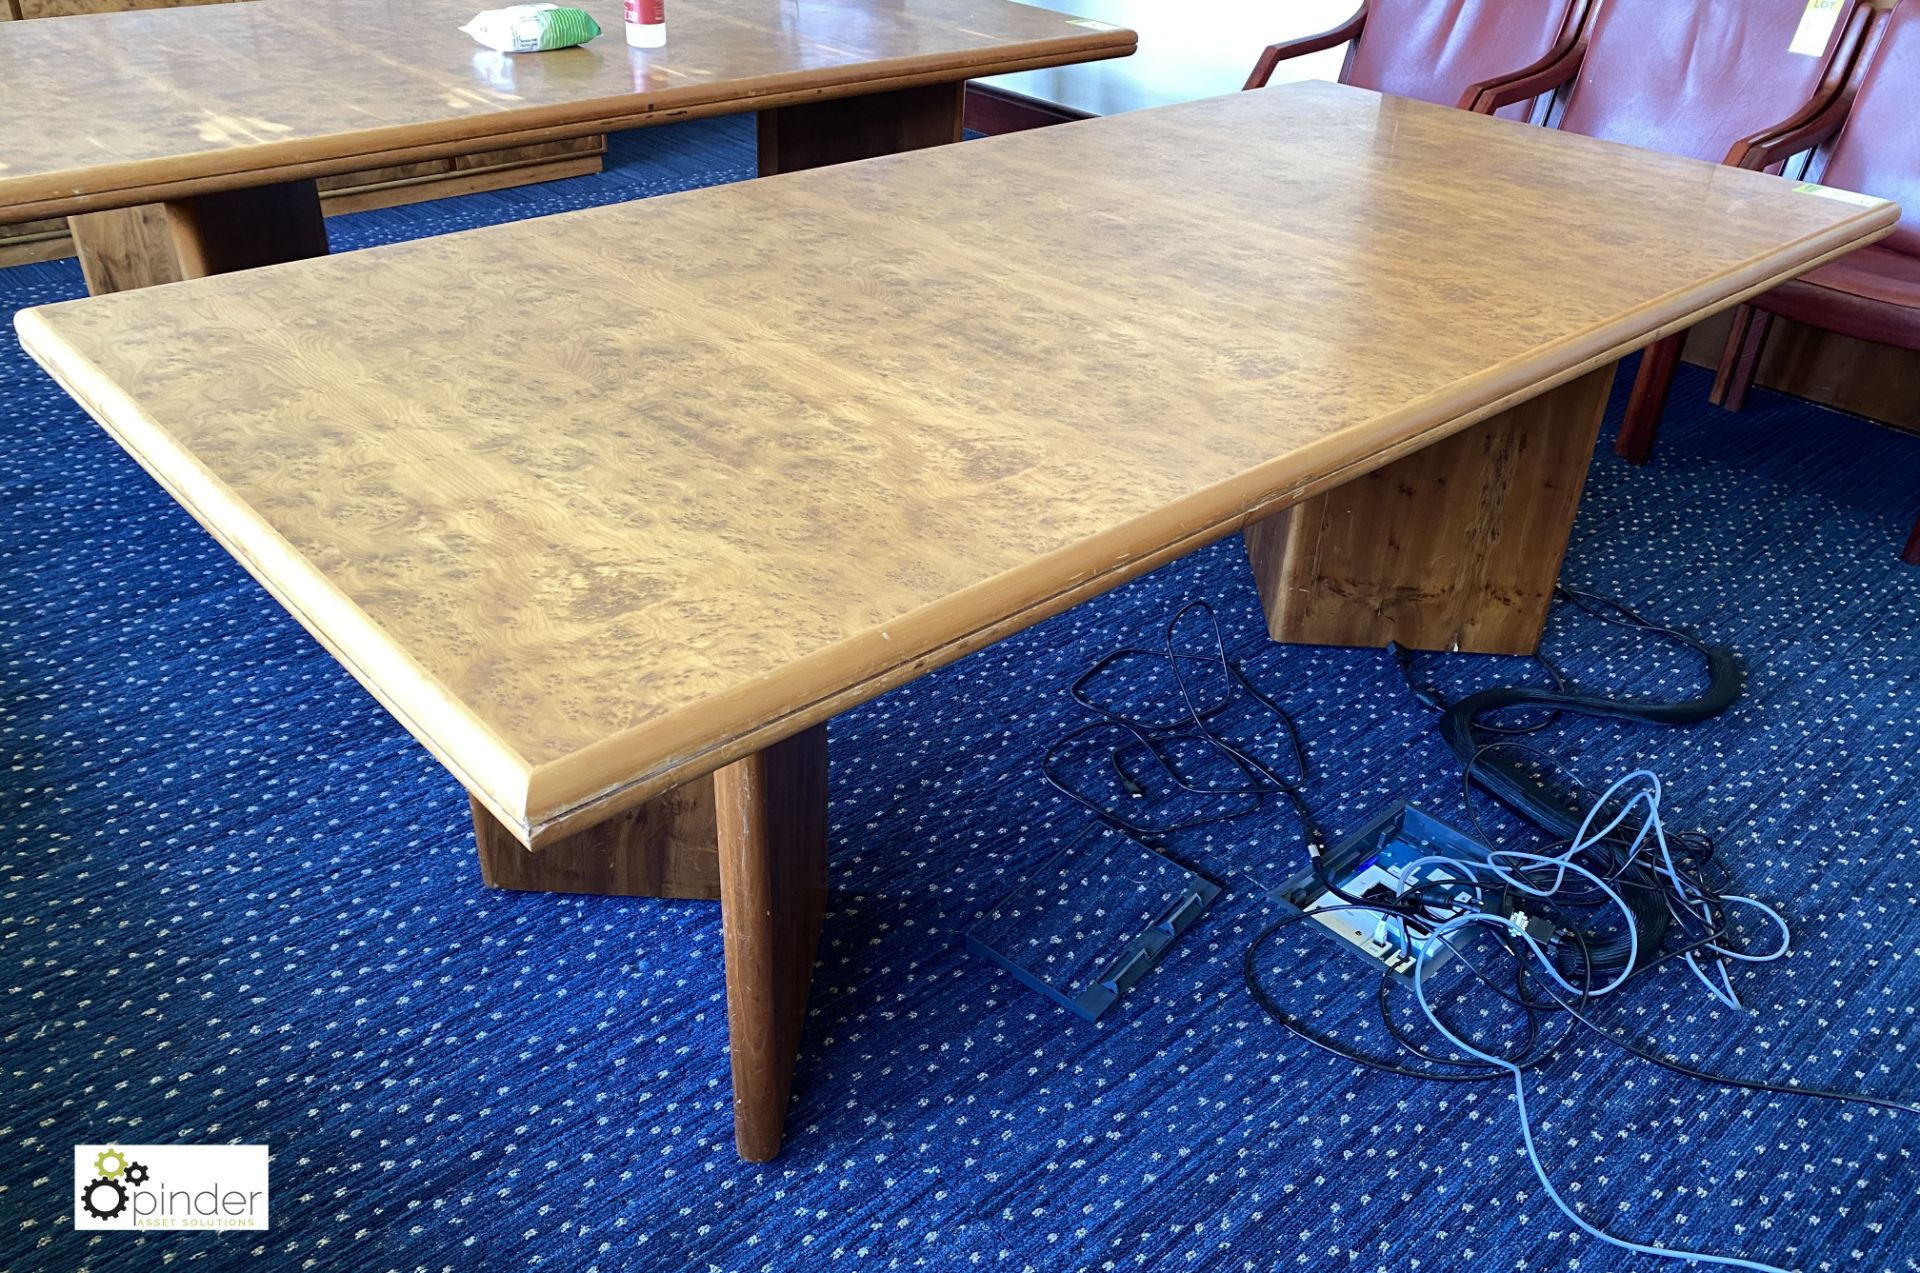 Burr walnut Meeting Table, 2100mm x 1000mm x 740mm (located in First Floor Boardroom/Meeting Room